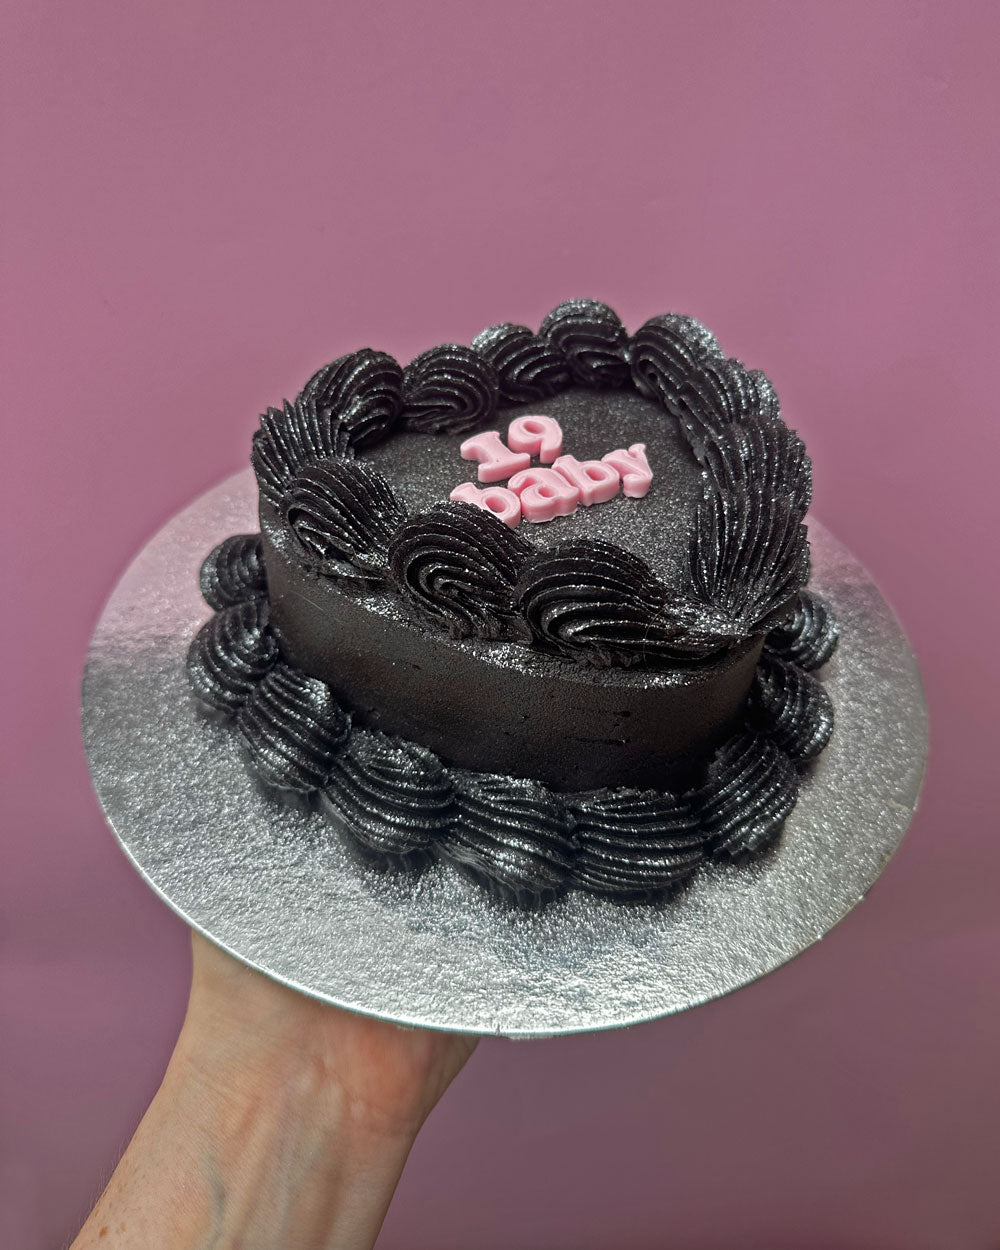 Mini Vintage Heart Cake - Black Glitter